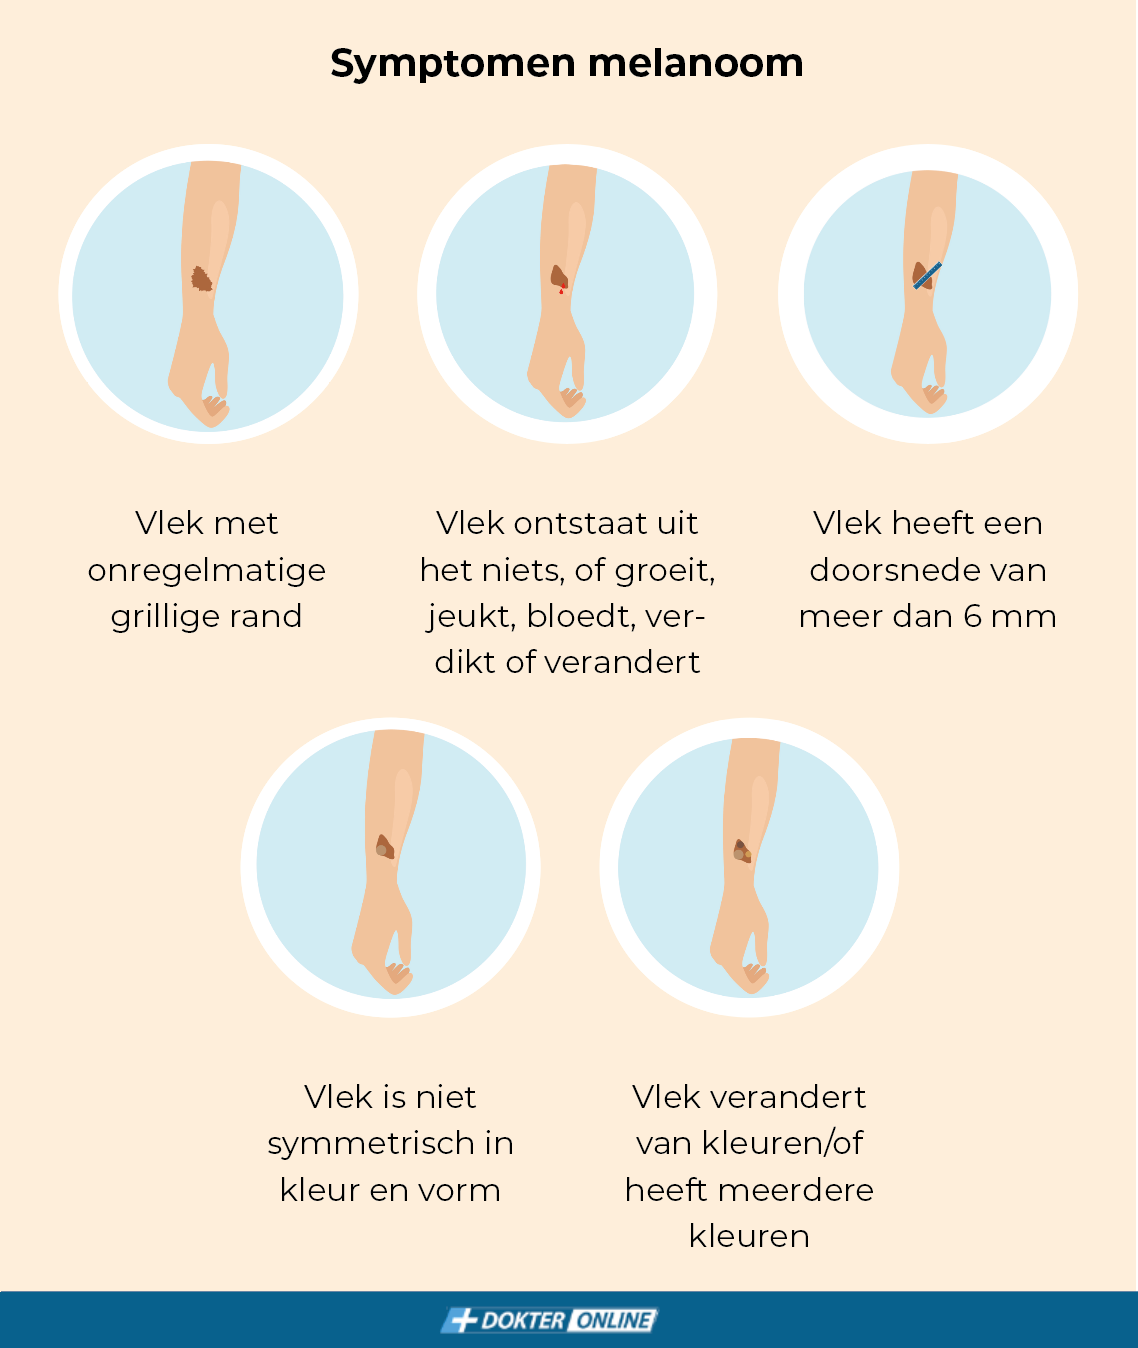 Symptomen melanoom - NL